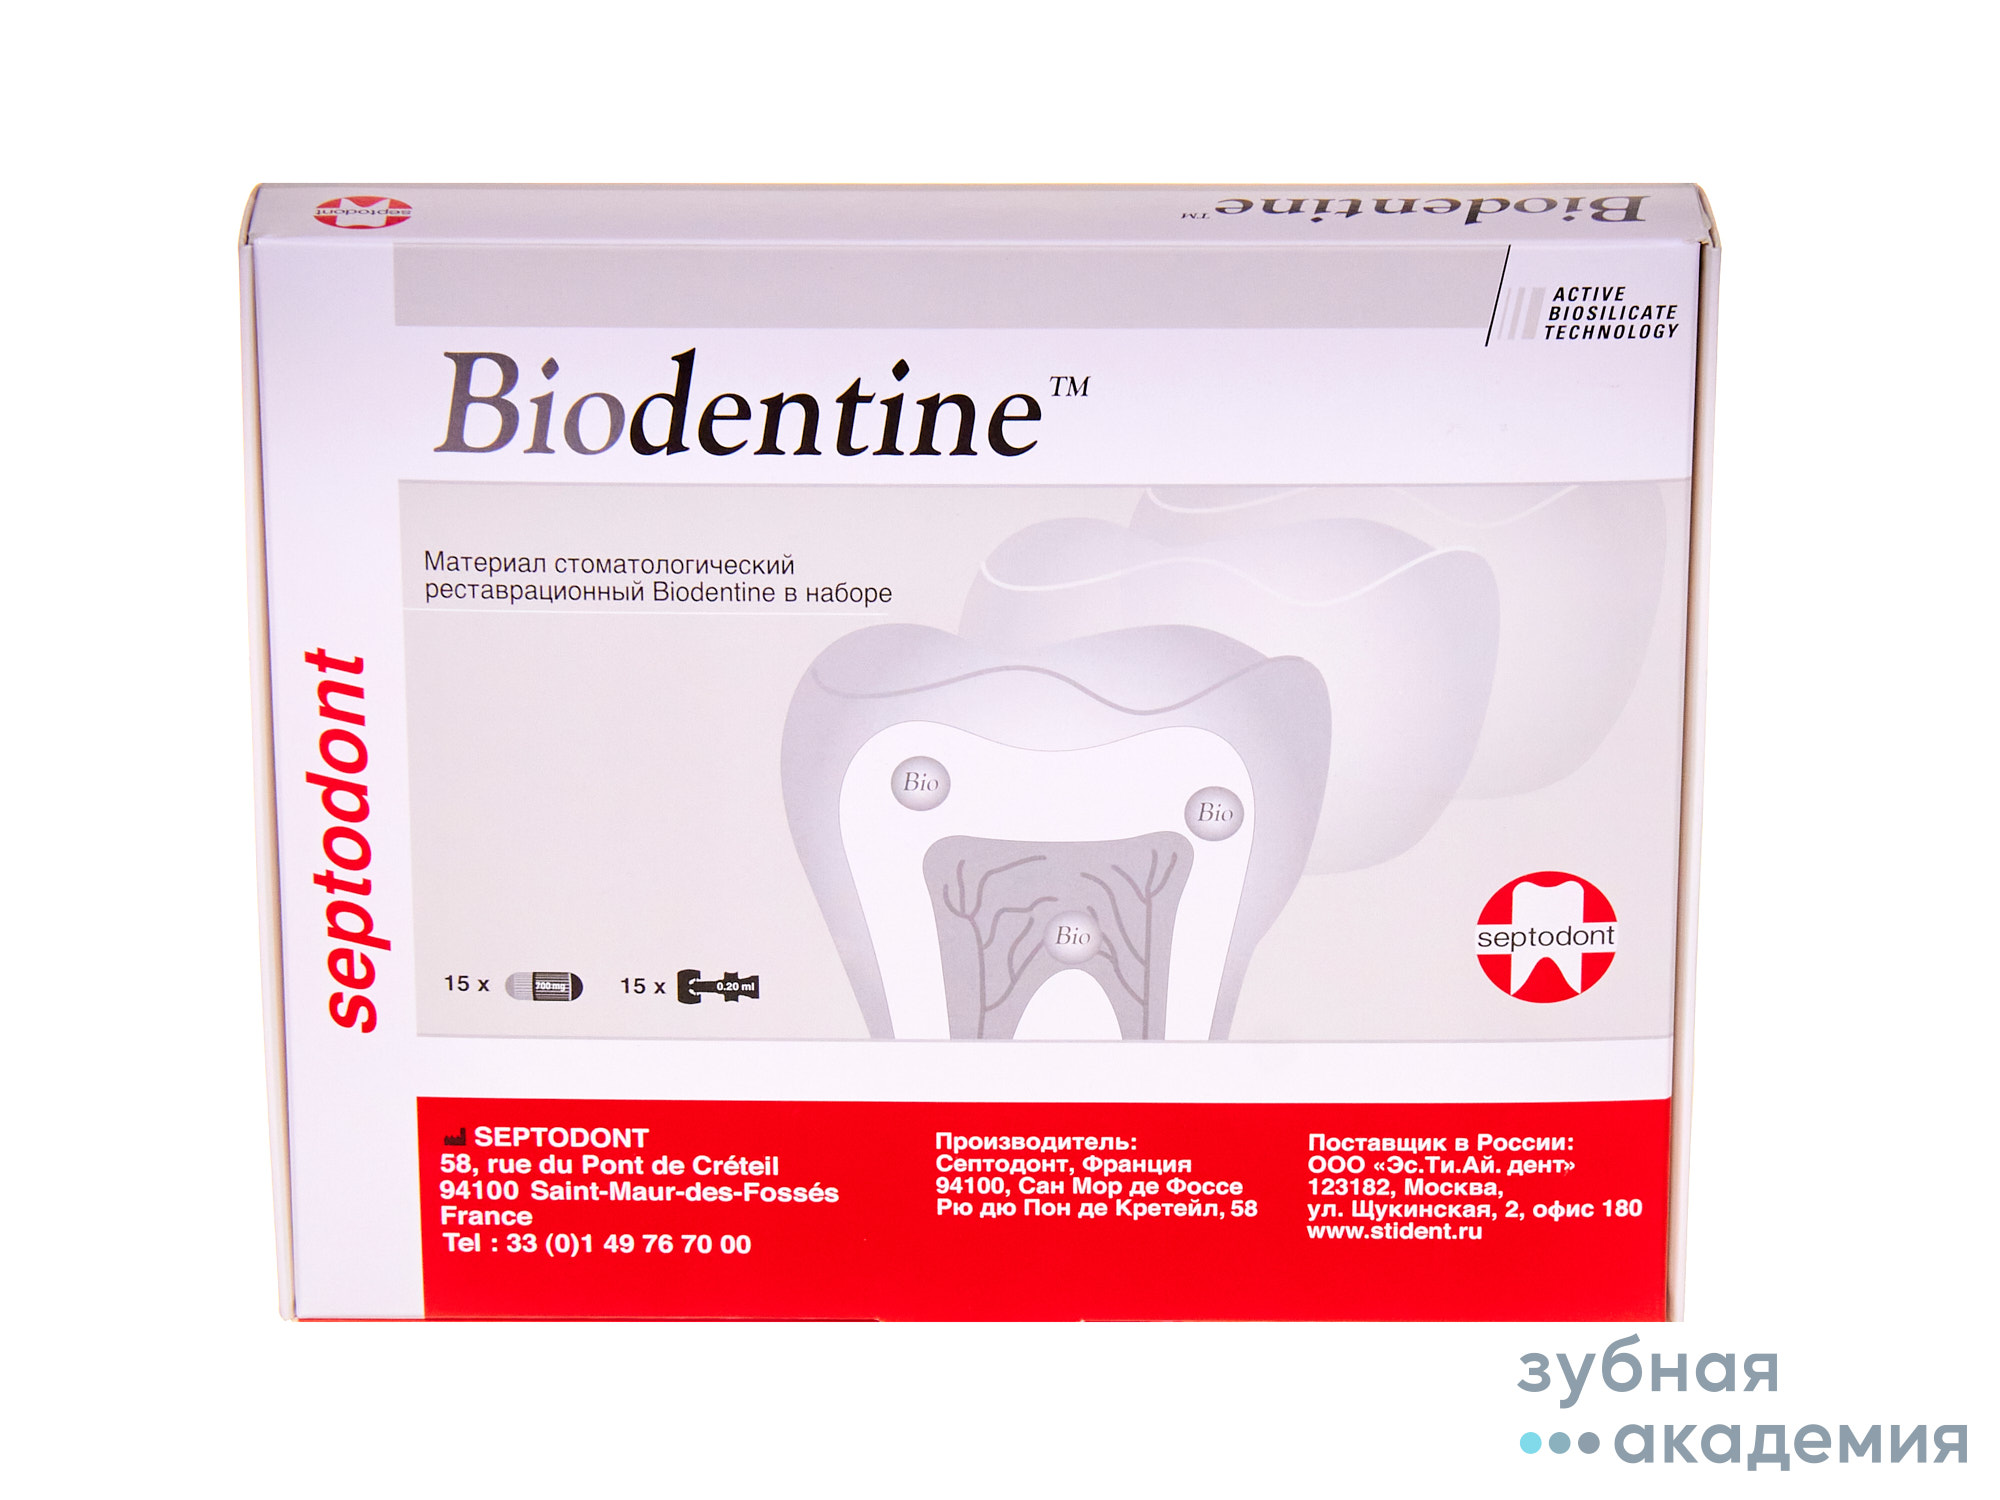 Biodentine / Биодентин (15 + 15 + аксессуары) Septodont/ Франция